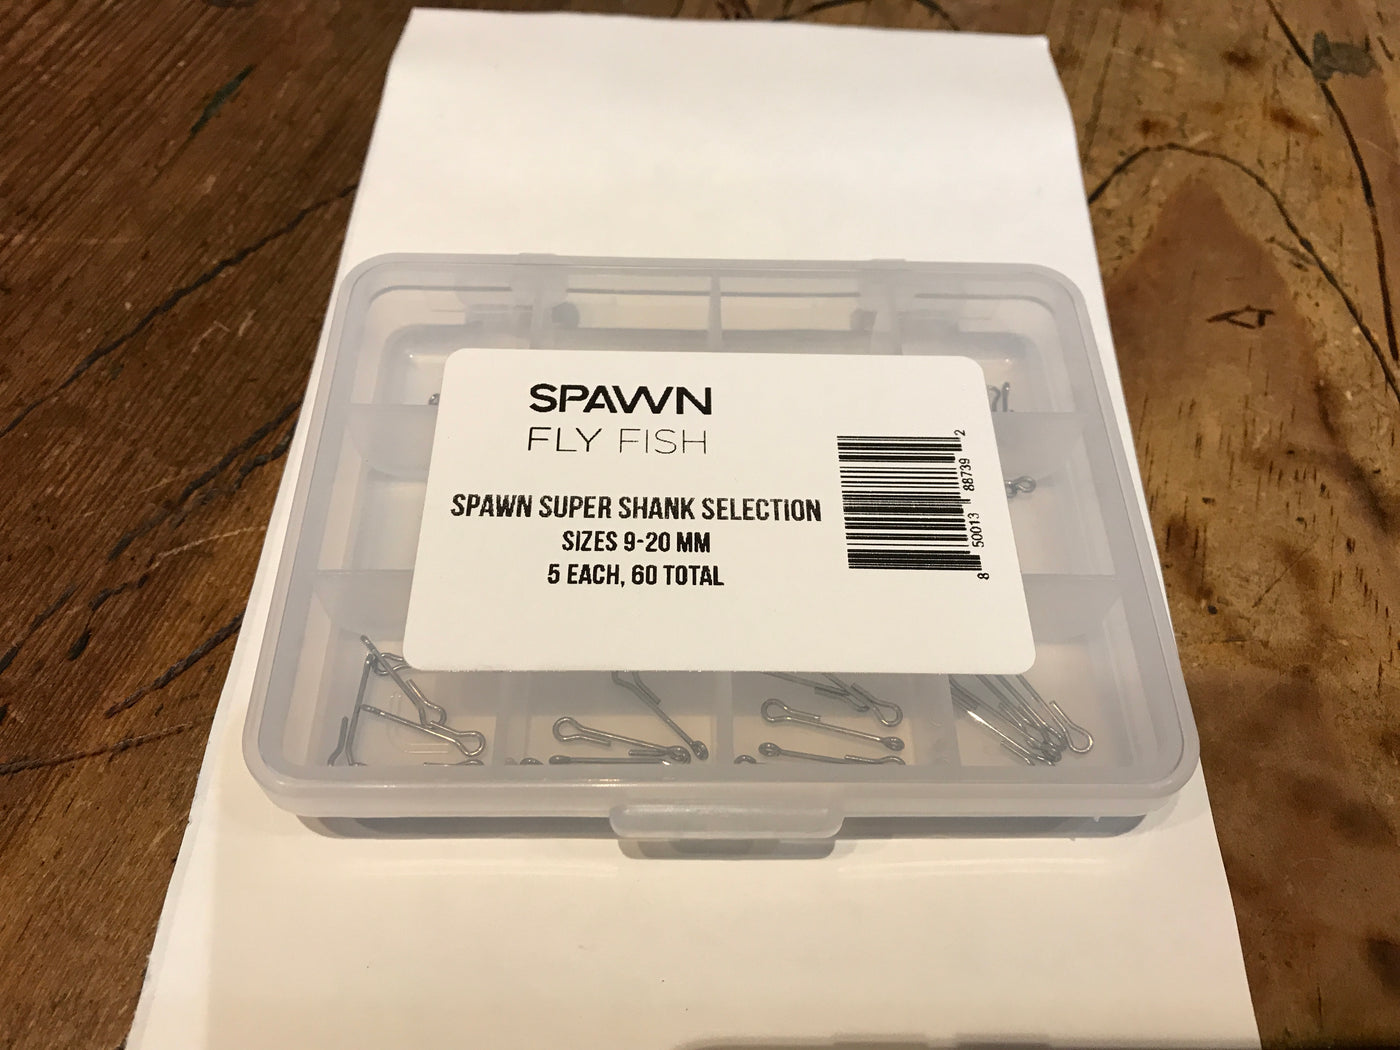 Spawn Super Shank Selection